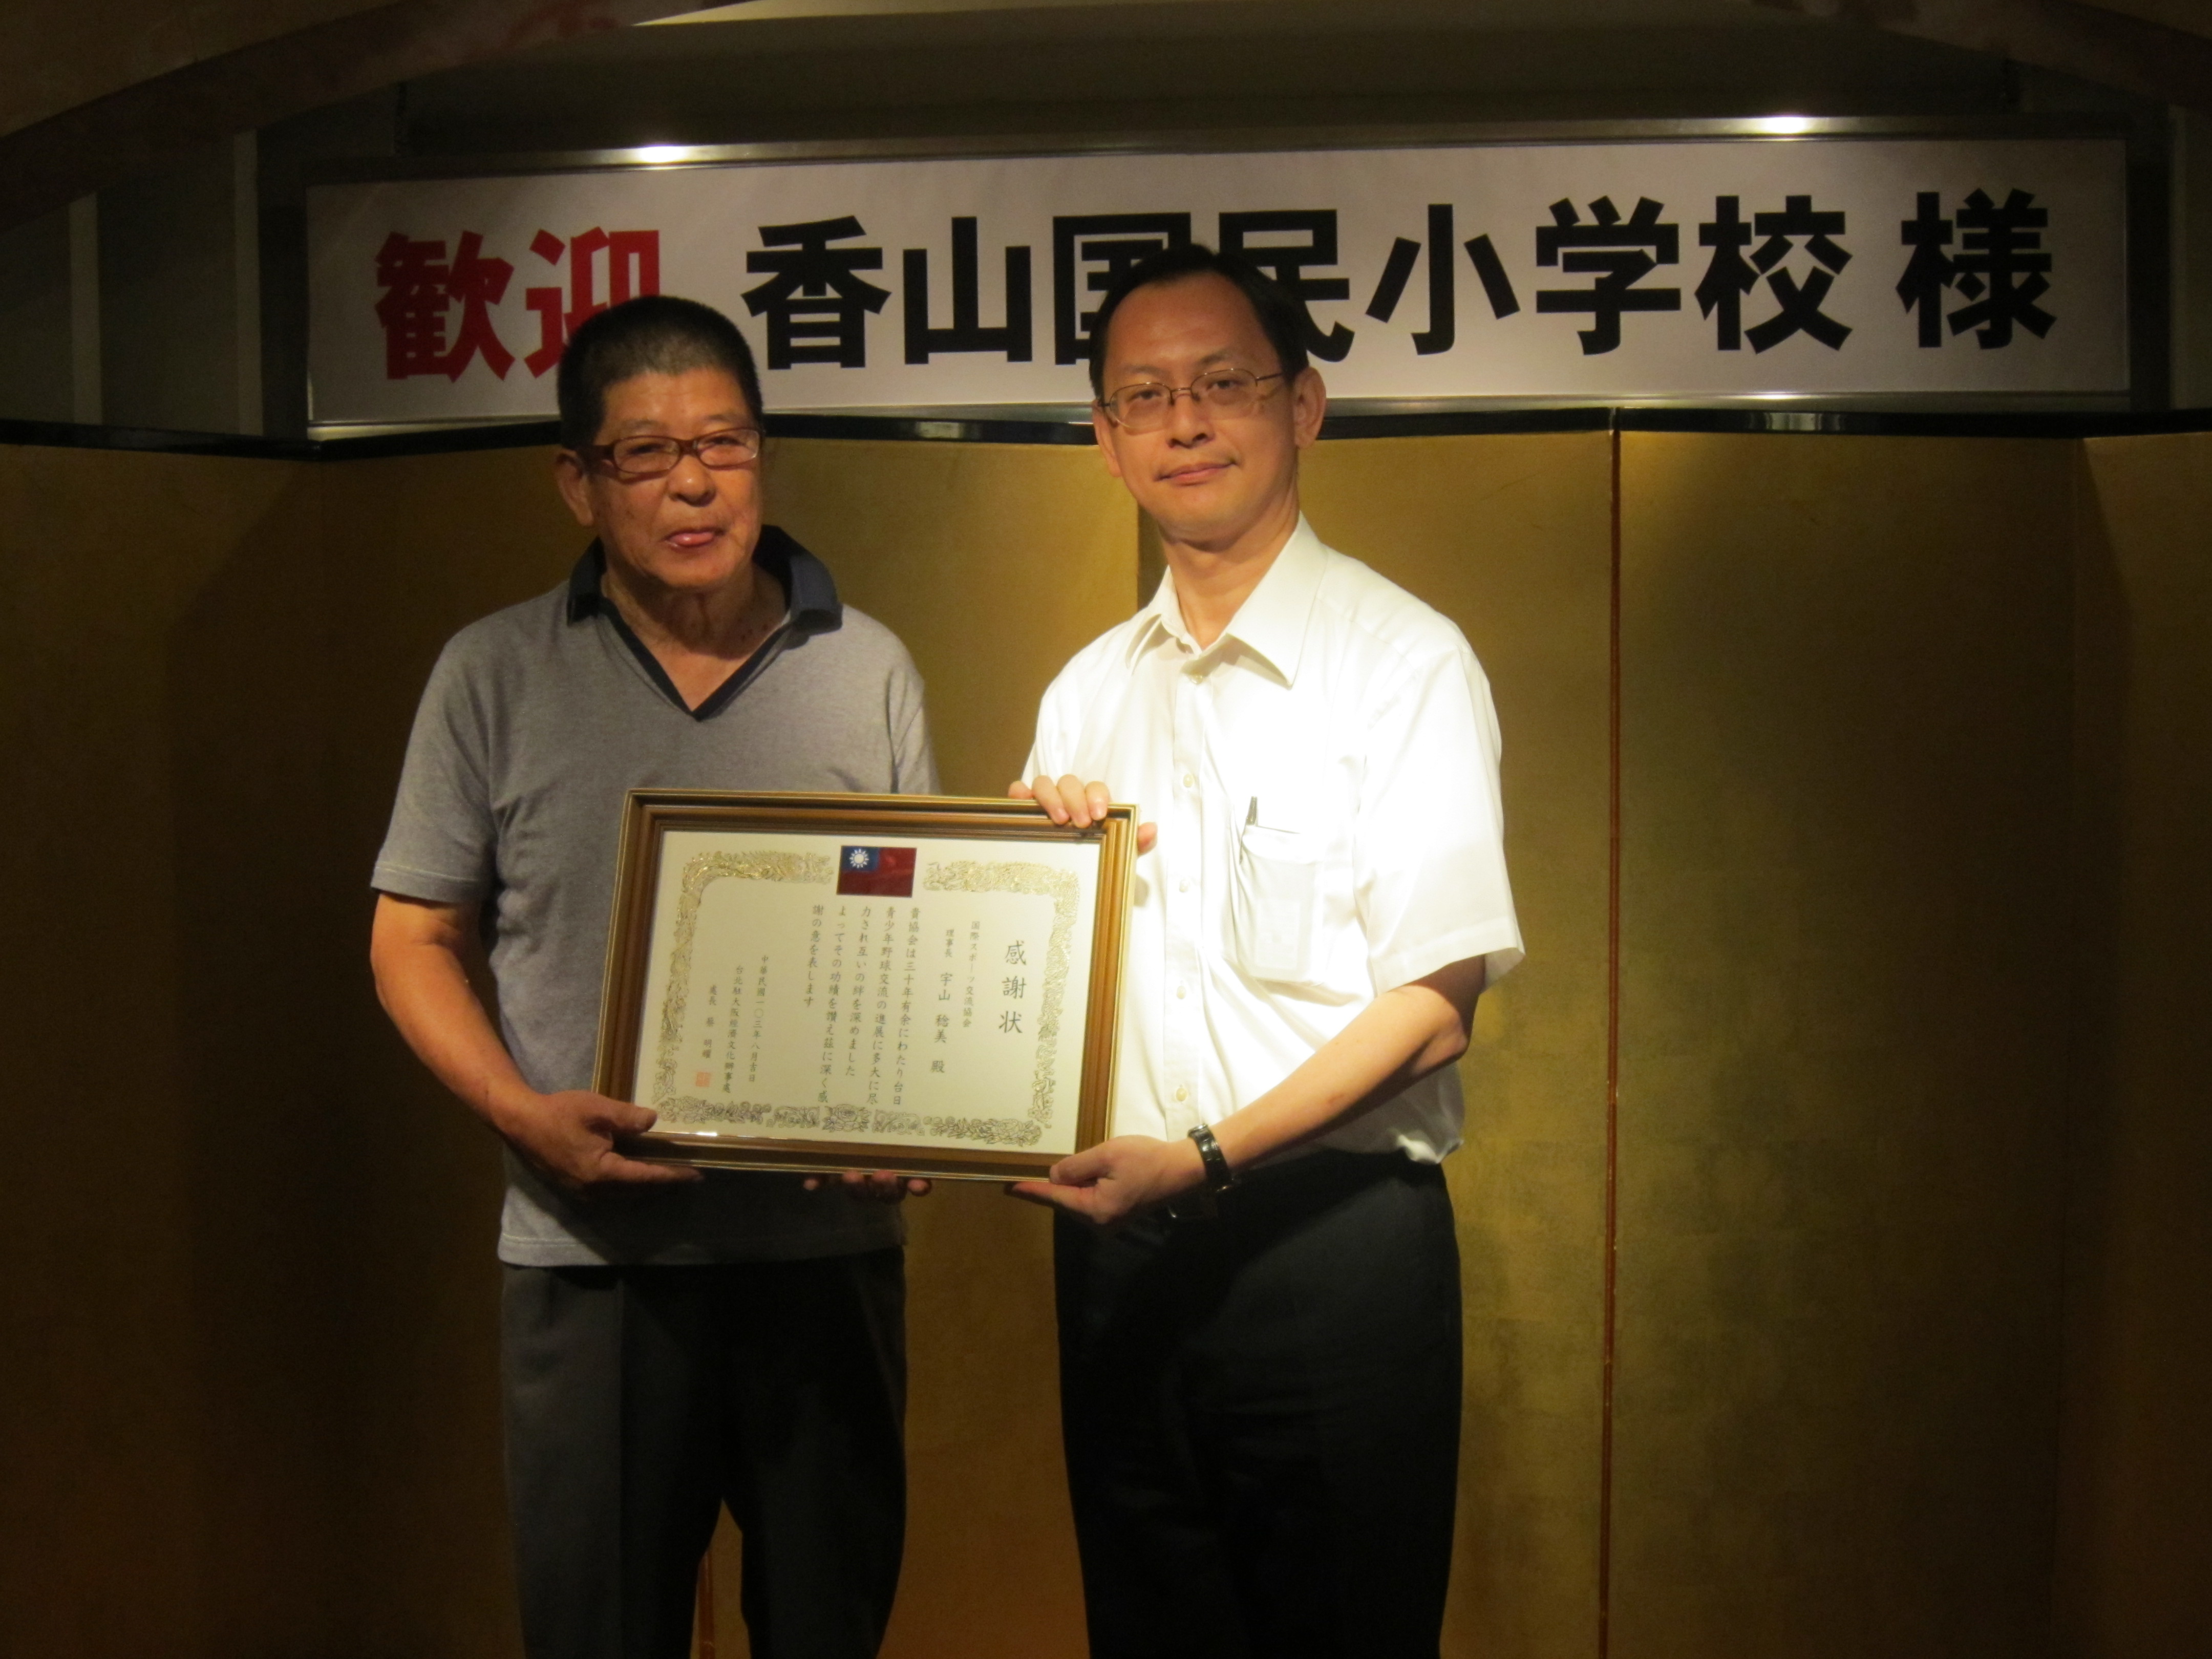 TECO in Osaka presents Award to Mr. Uyama Toshimi, Chairman of the Japan International Sport Association